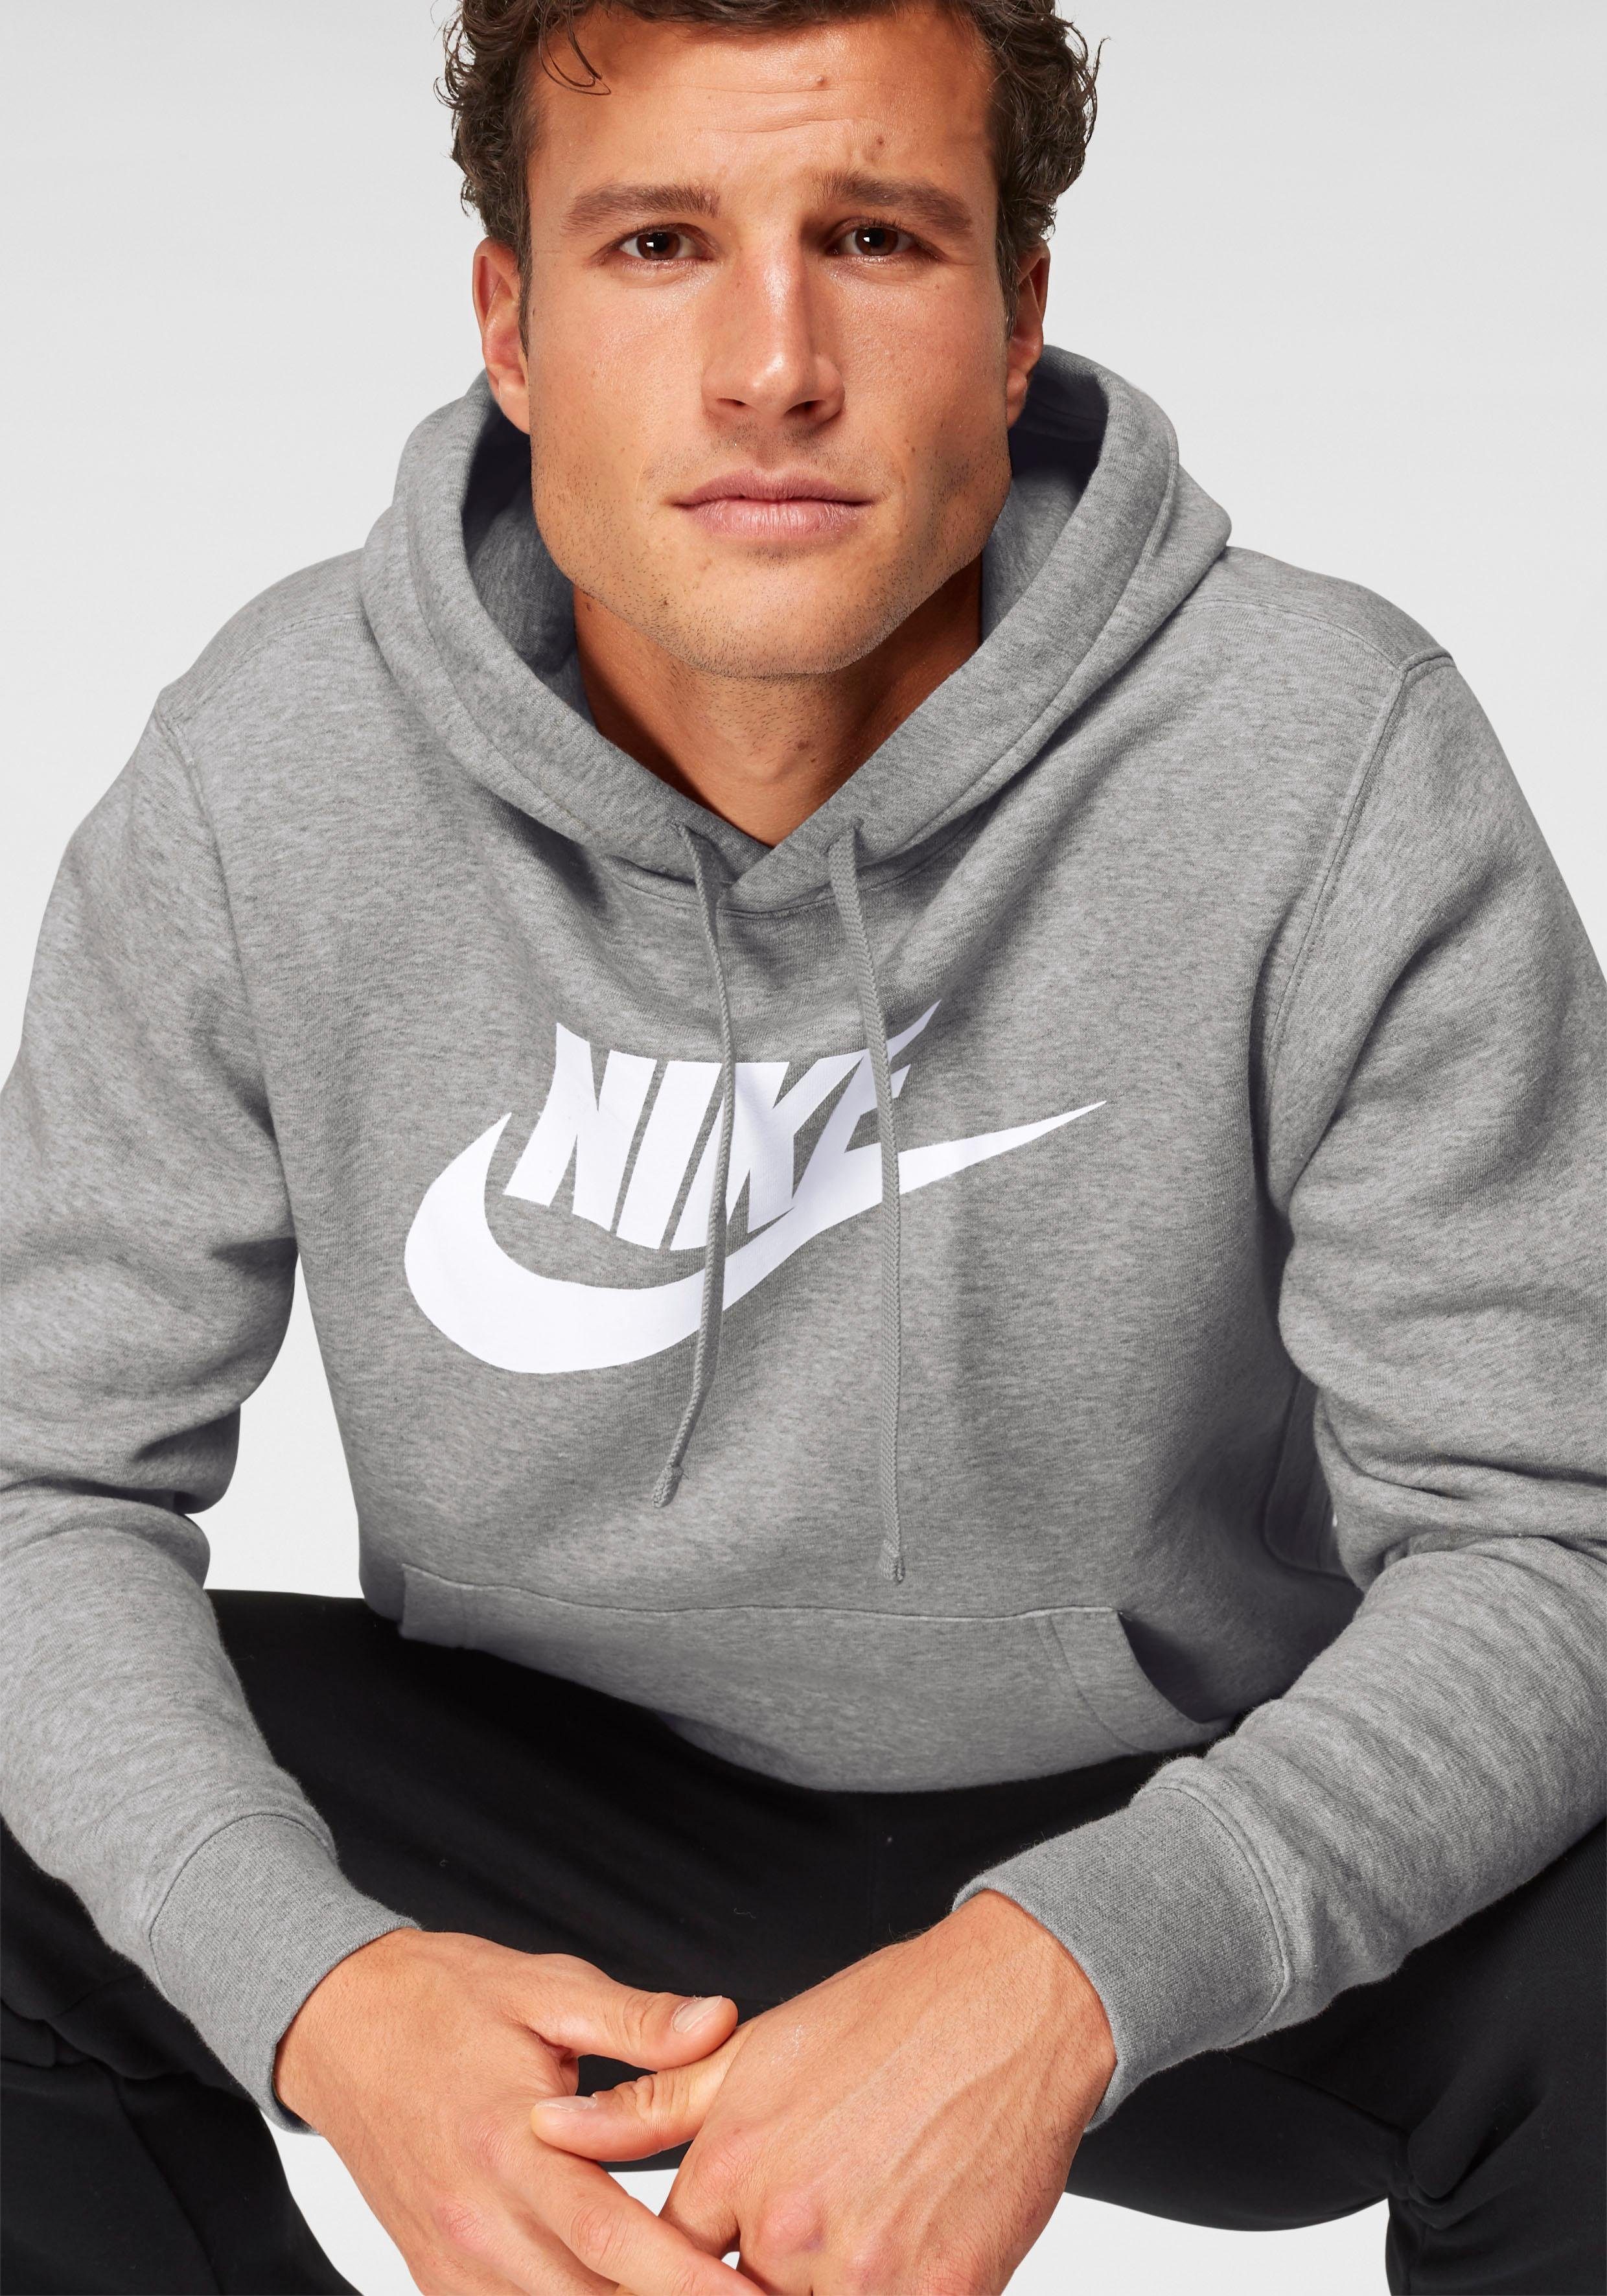 nike sportswear heritage men's graphic pullover hoodie